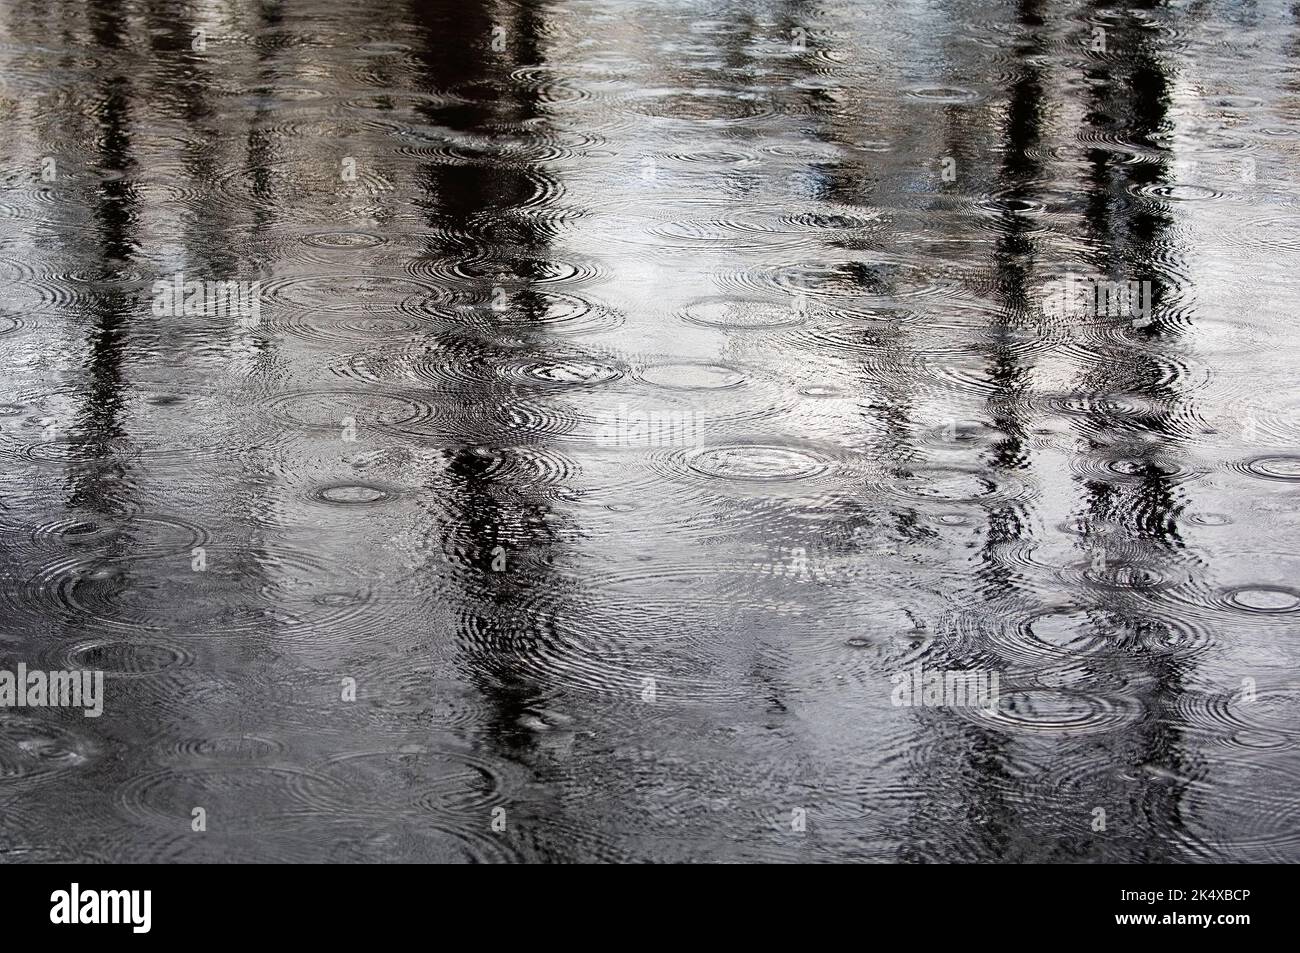 Rainpattern en el estanque de la caldera Foto de stock